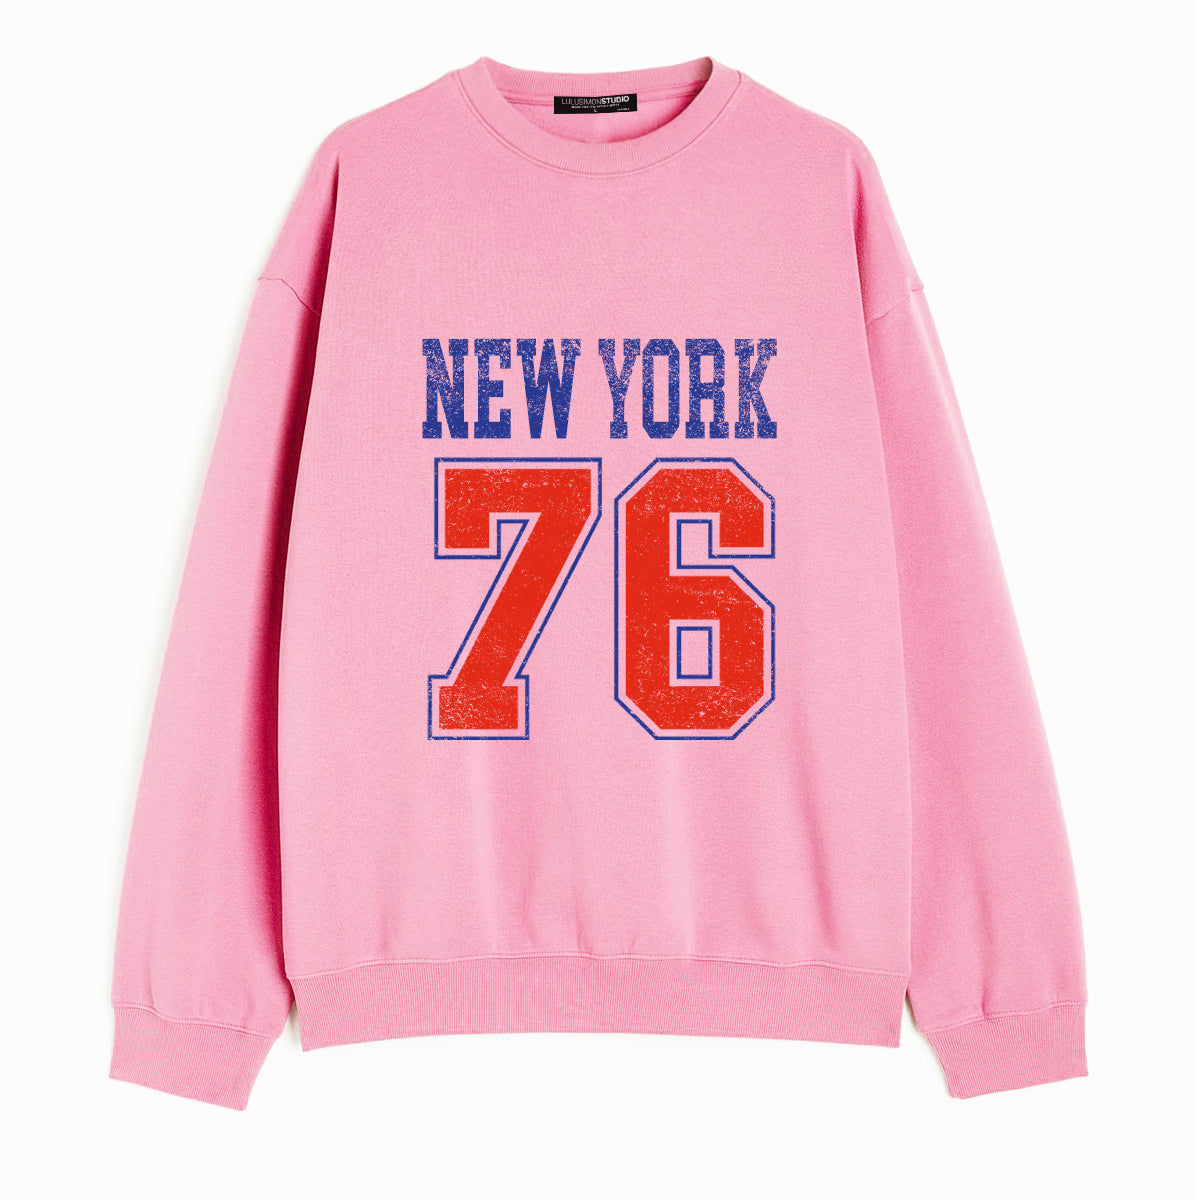 New York 76 Sweatshirt